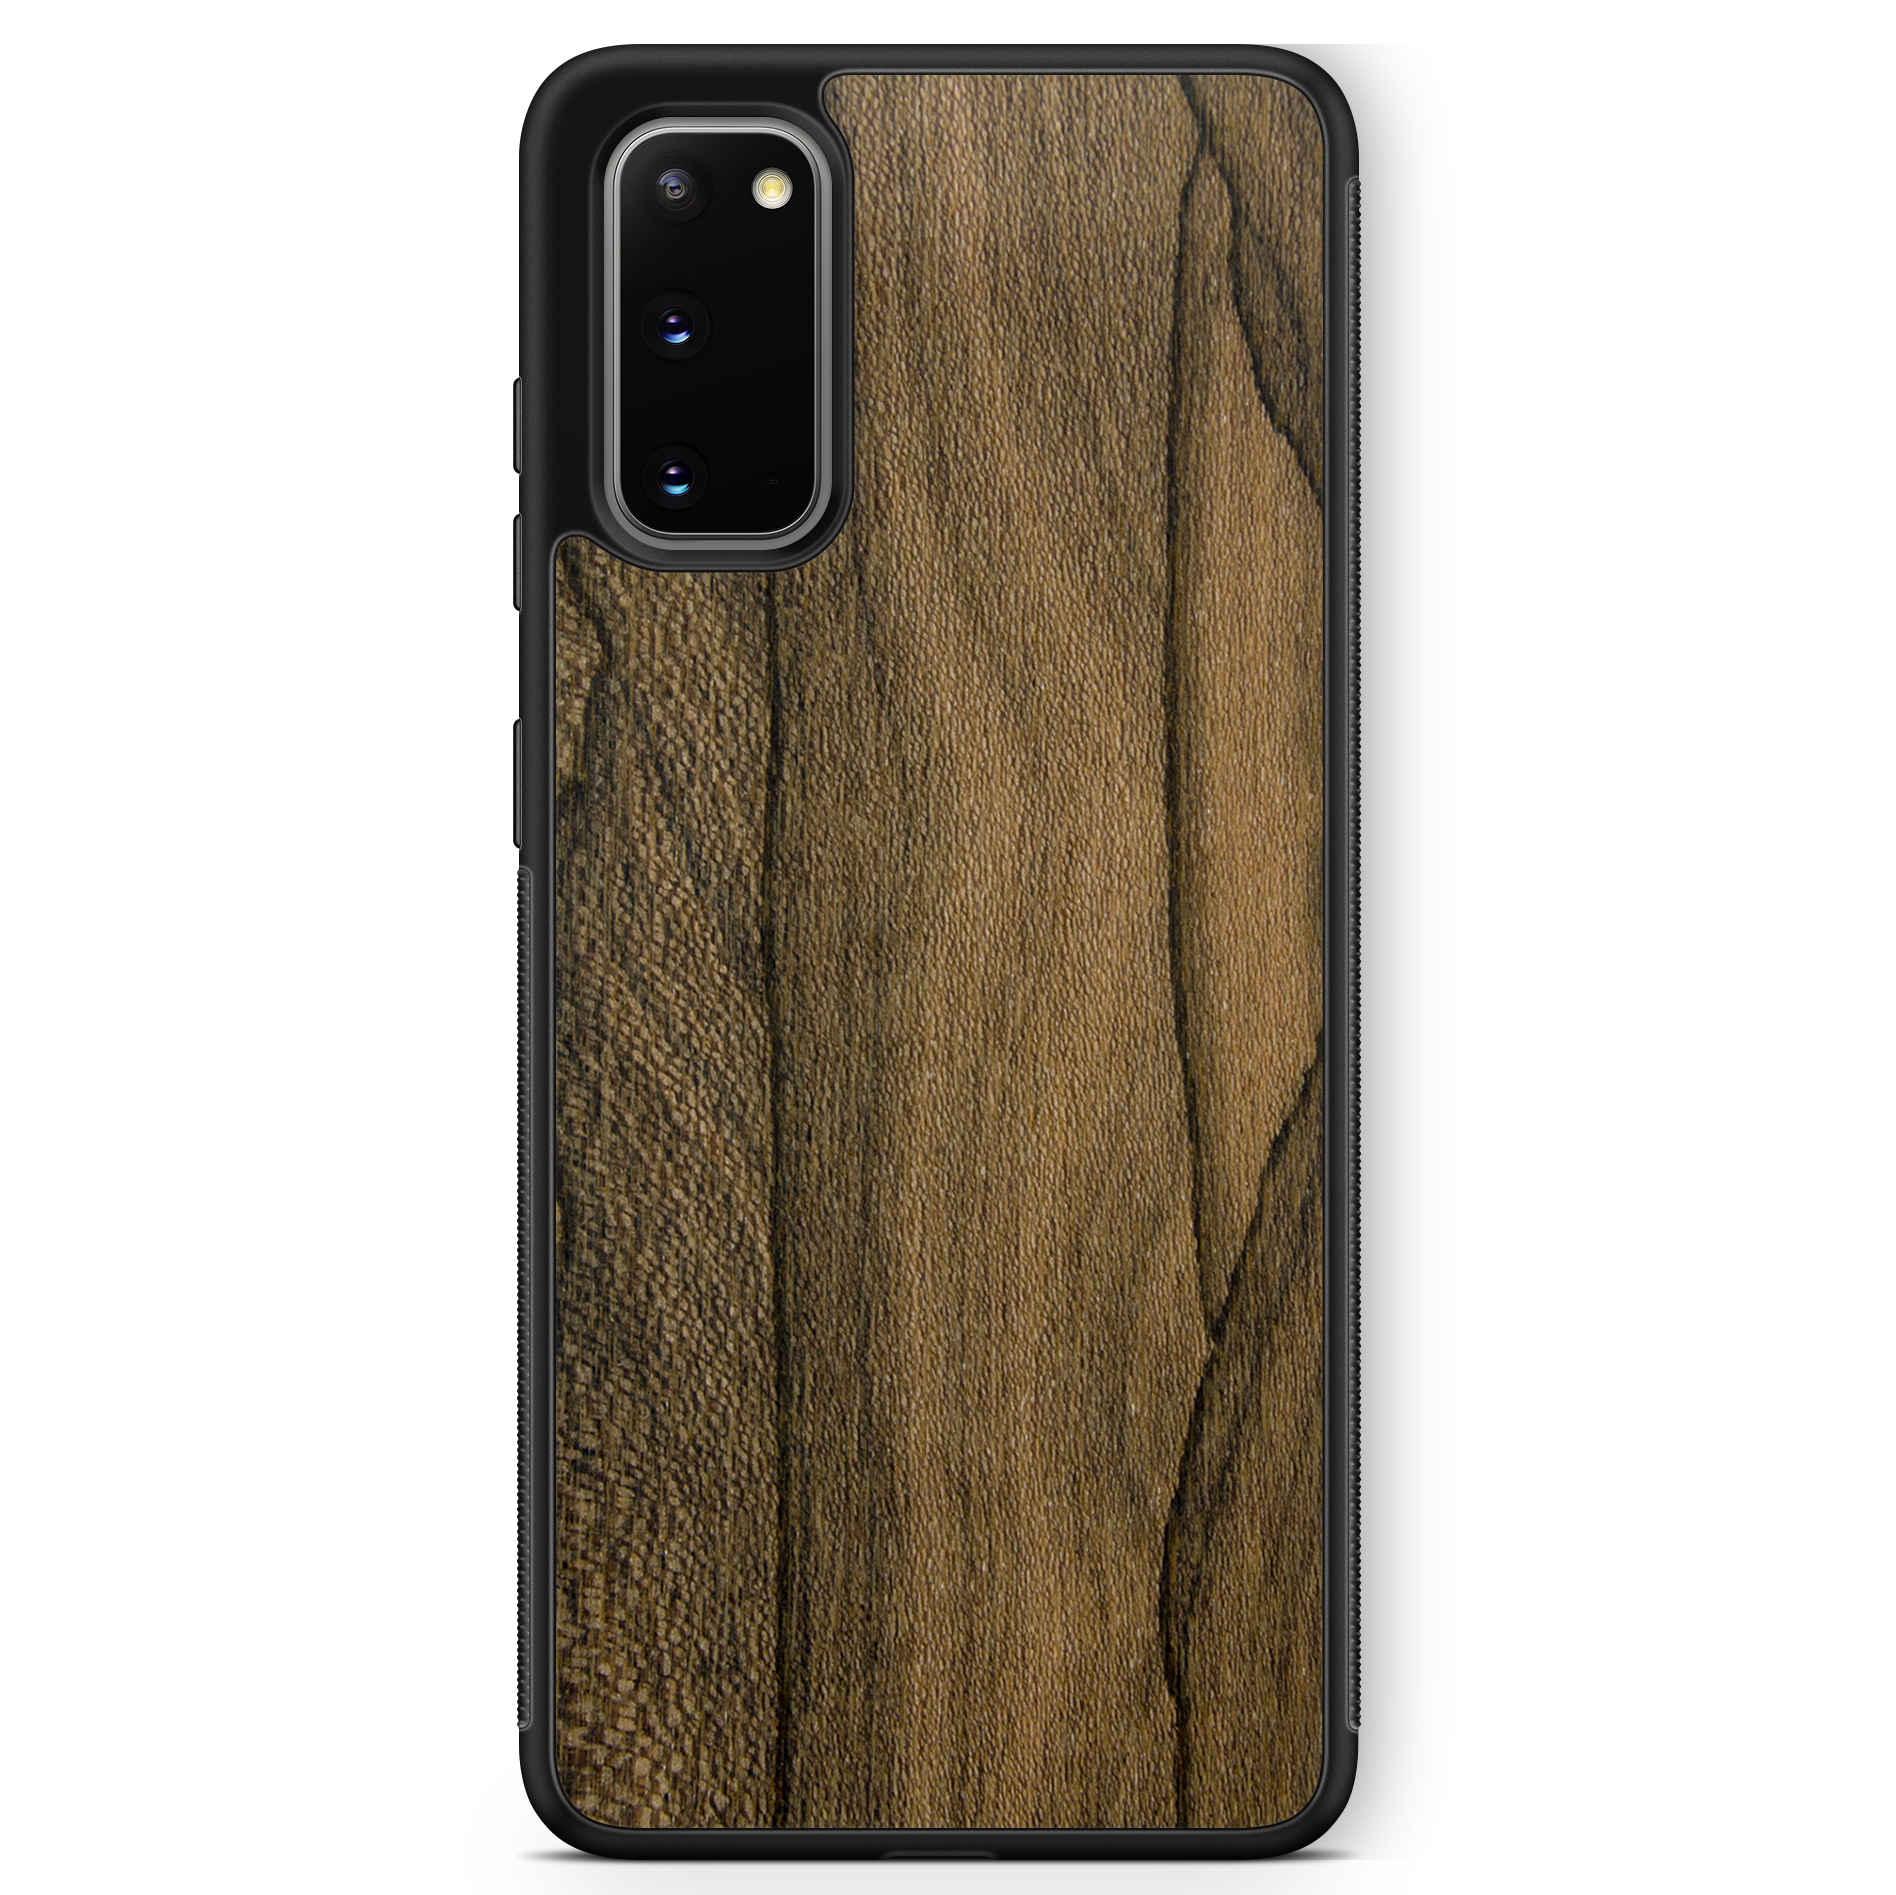  Ziricote Wood Samsung S20 Phone Case 